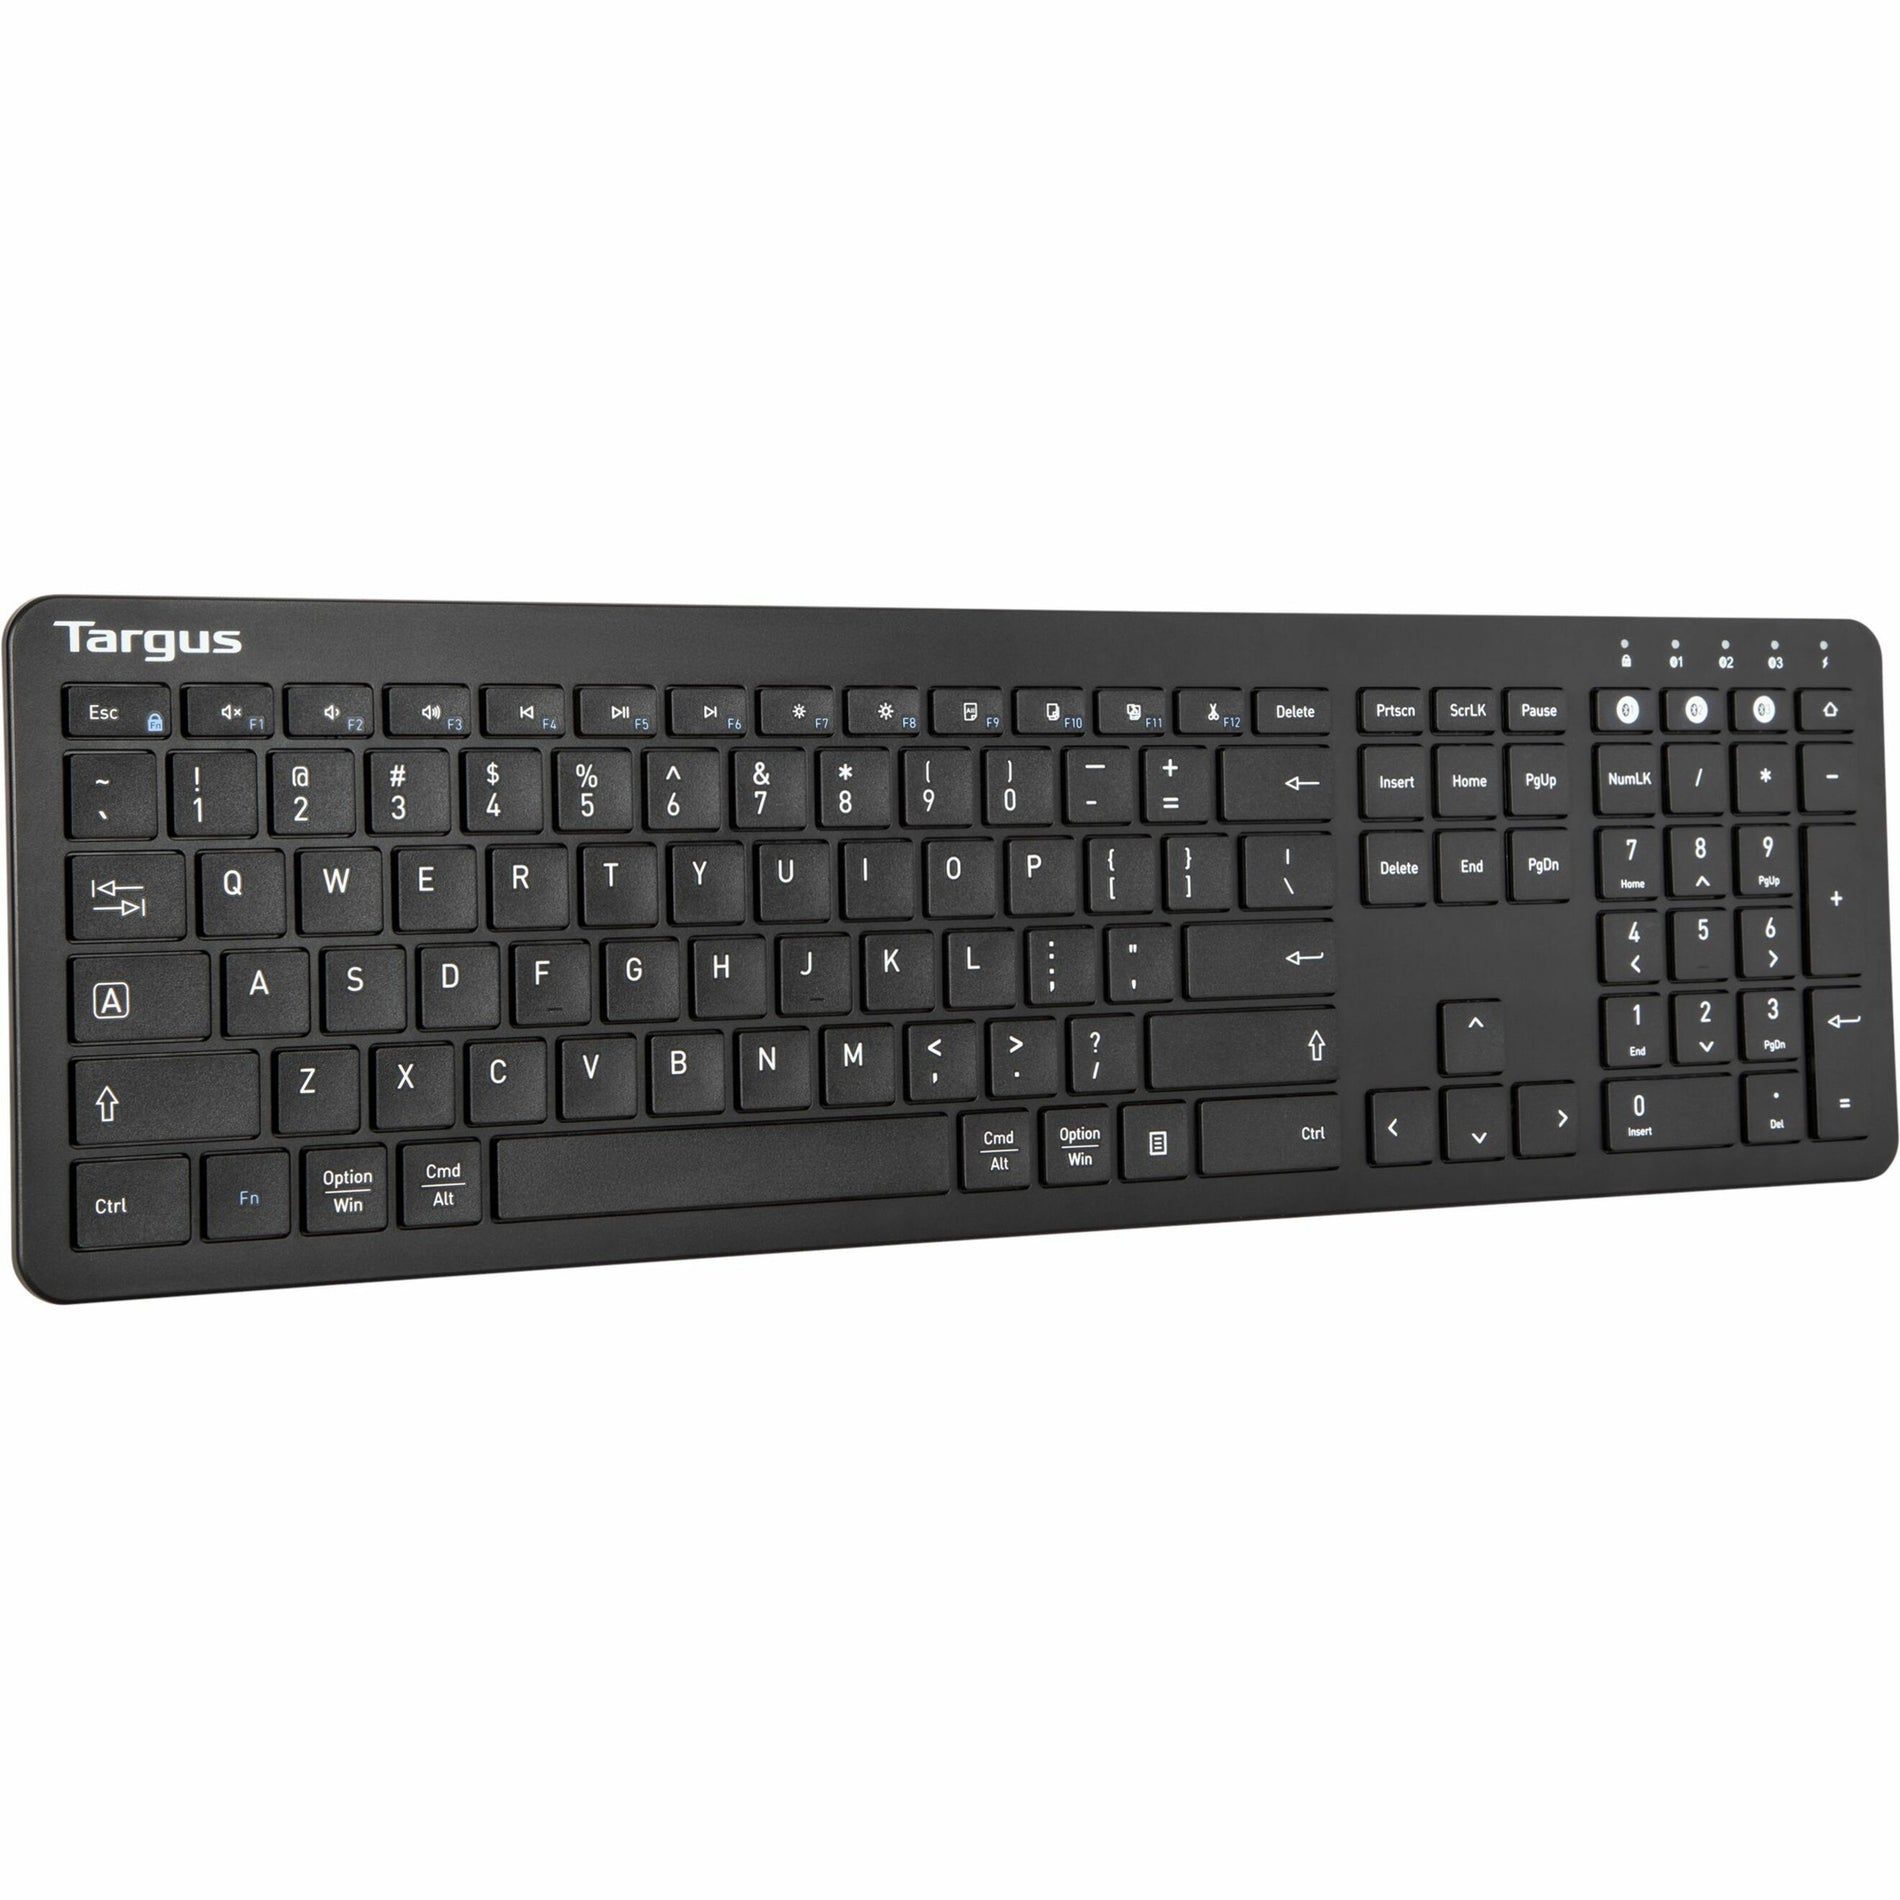 Targus AKB864US Full-Size Multi-Device Bluetooth Antimicrobial Keyboard, Black